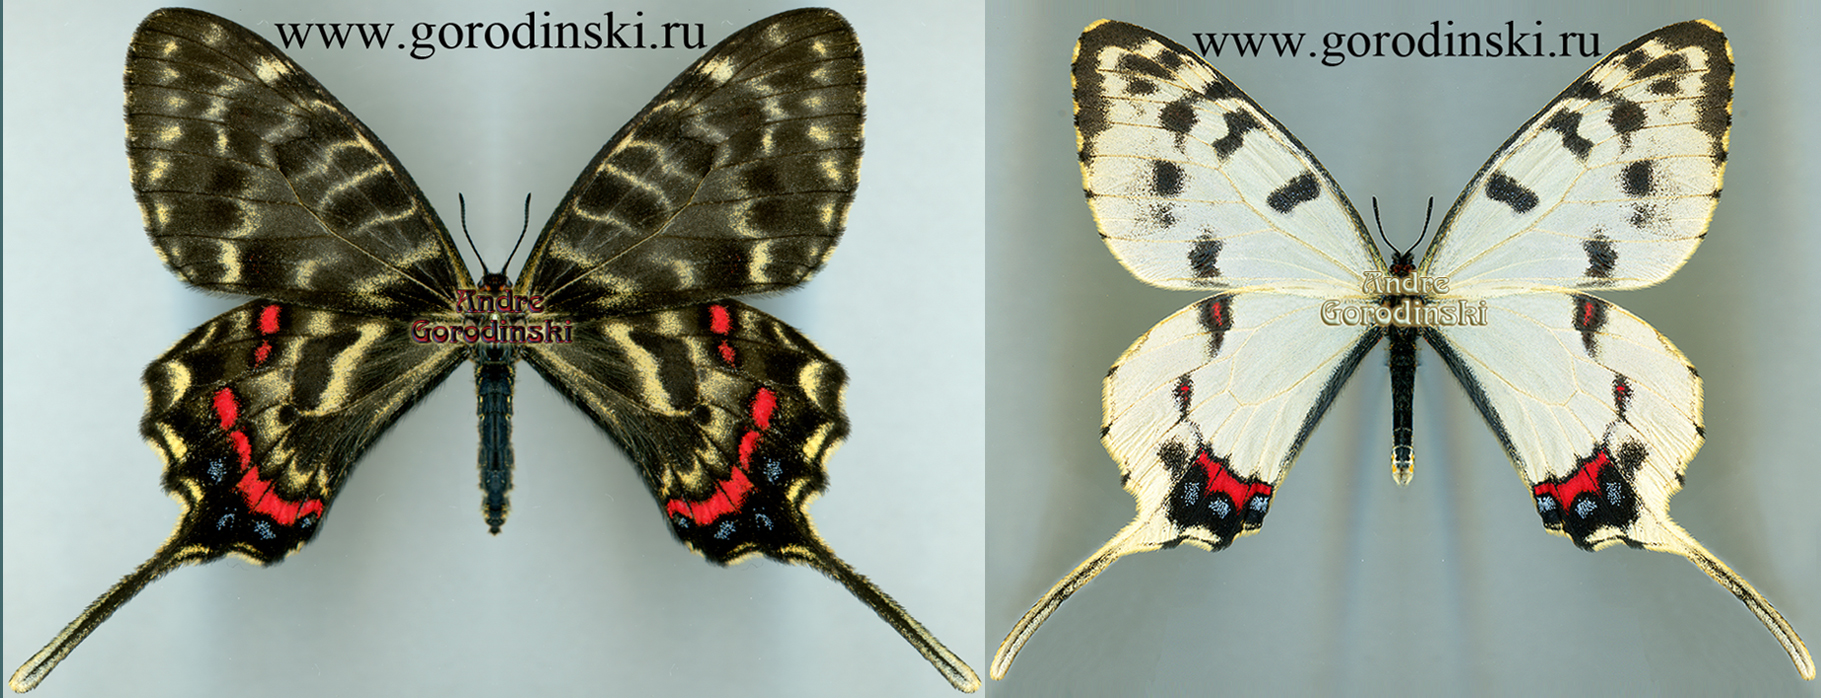 http://www.gorodinski.ru/papilionidae/Sericinus montela montela.jpg